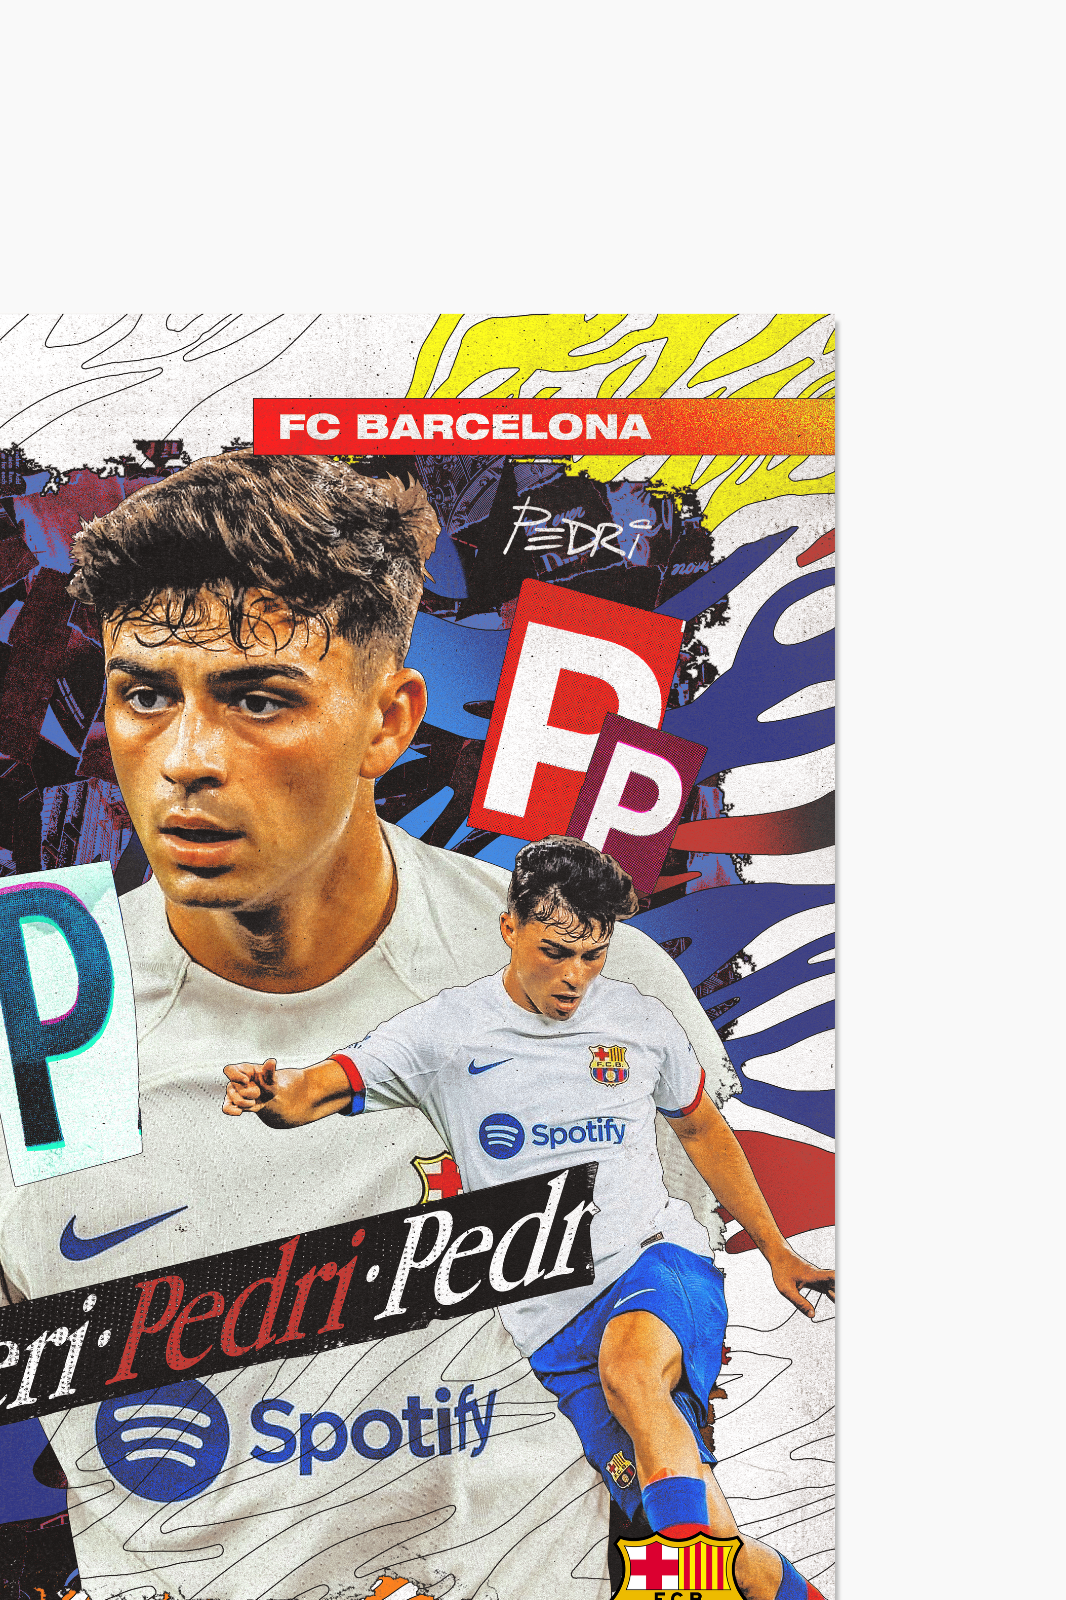 FC Barcelona - Poster Pedri 999 exemplaires